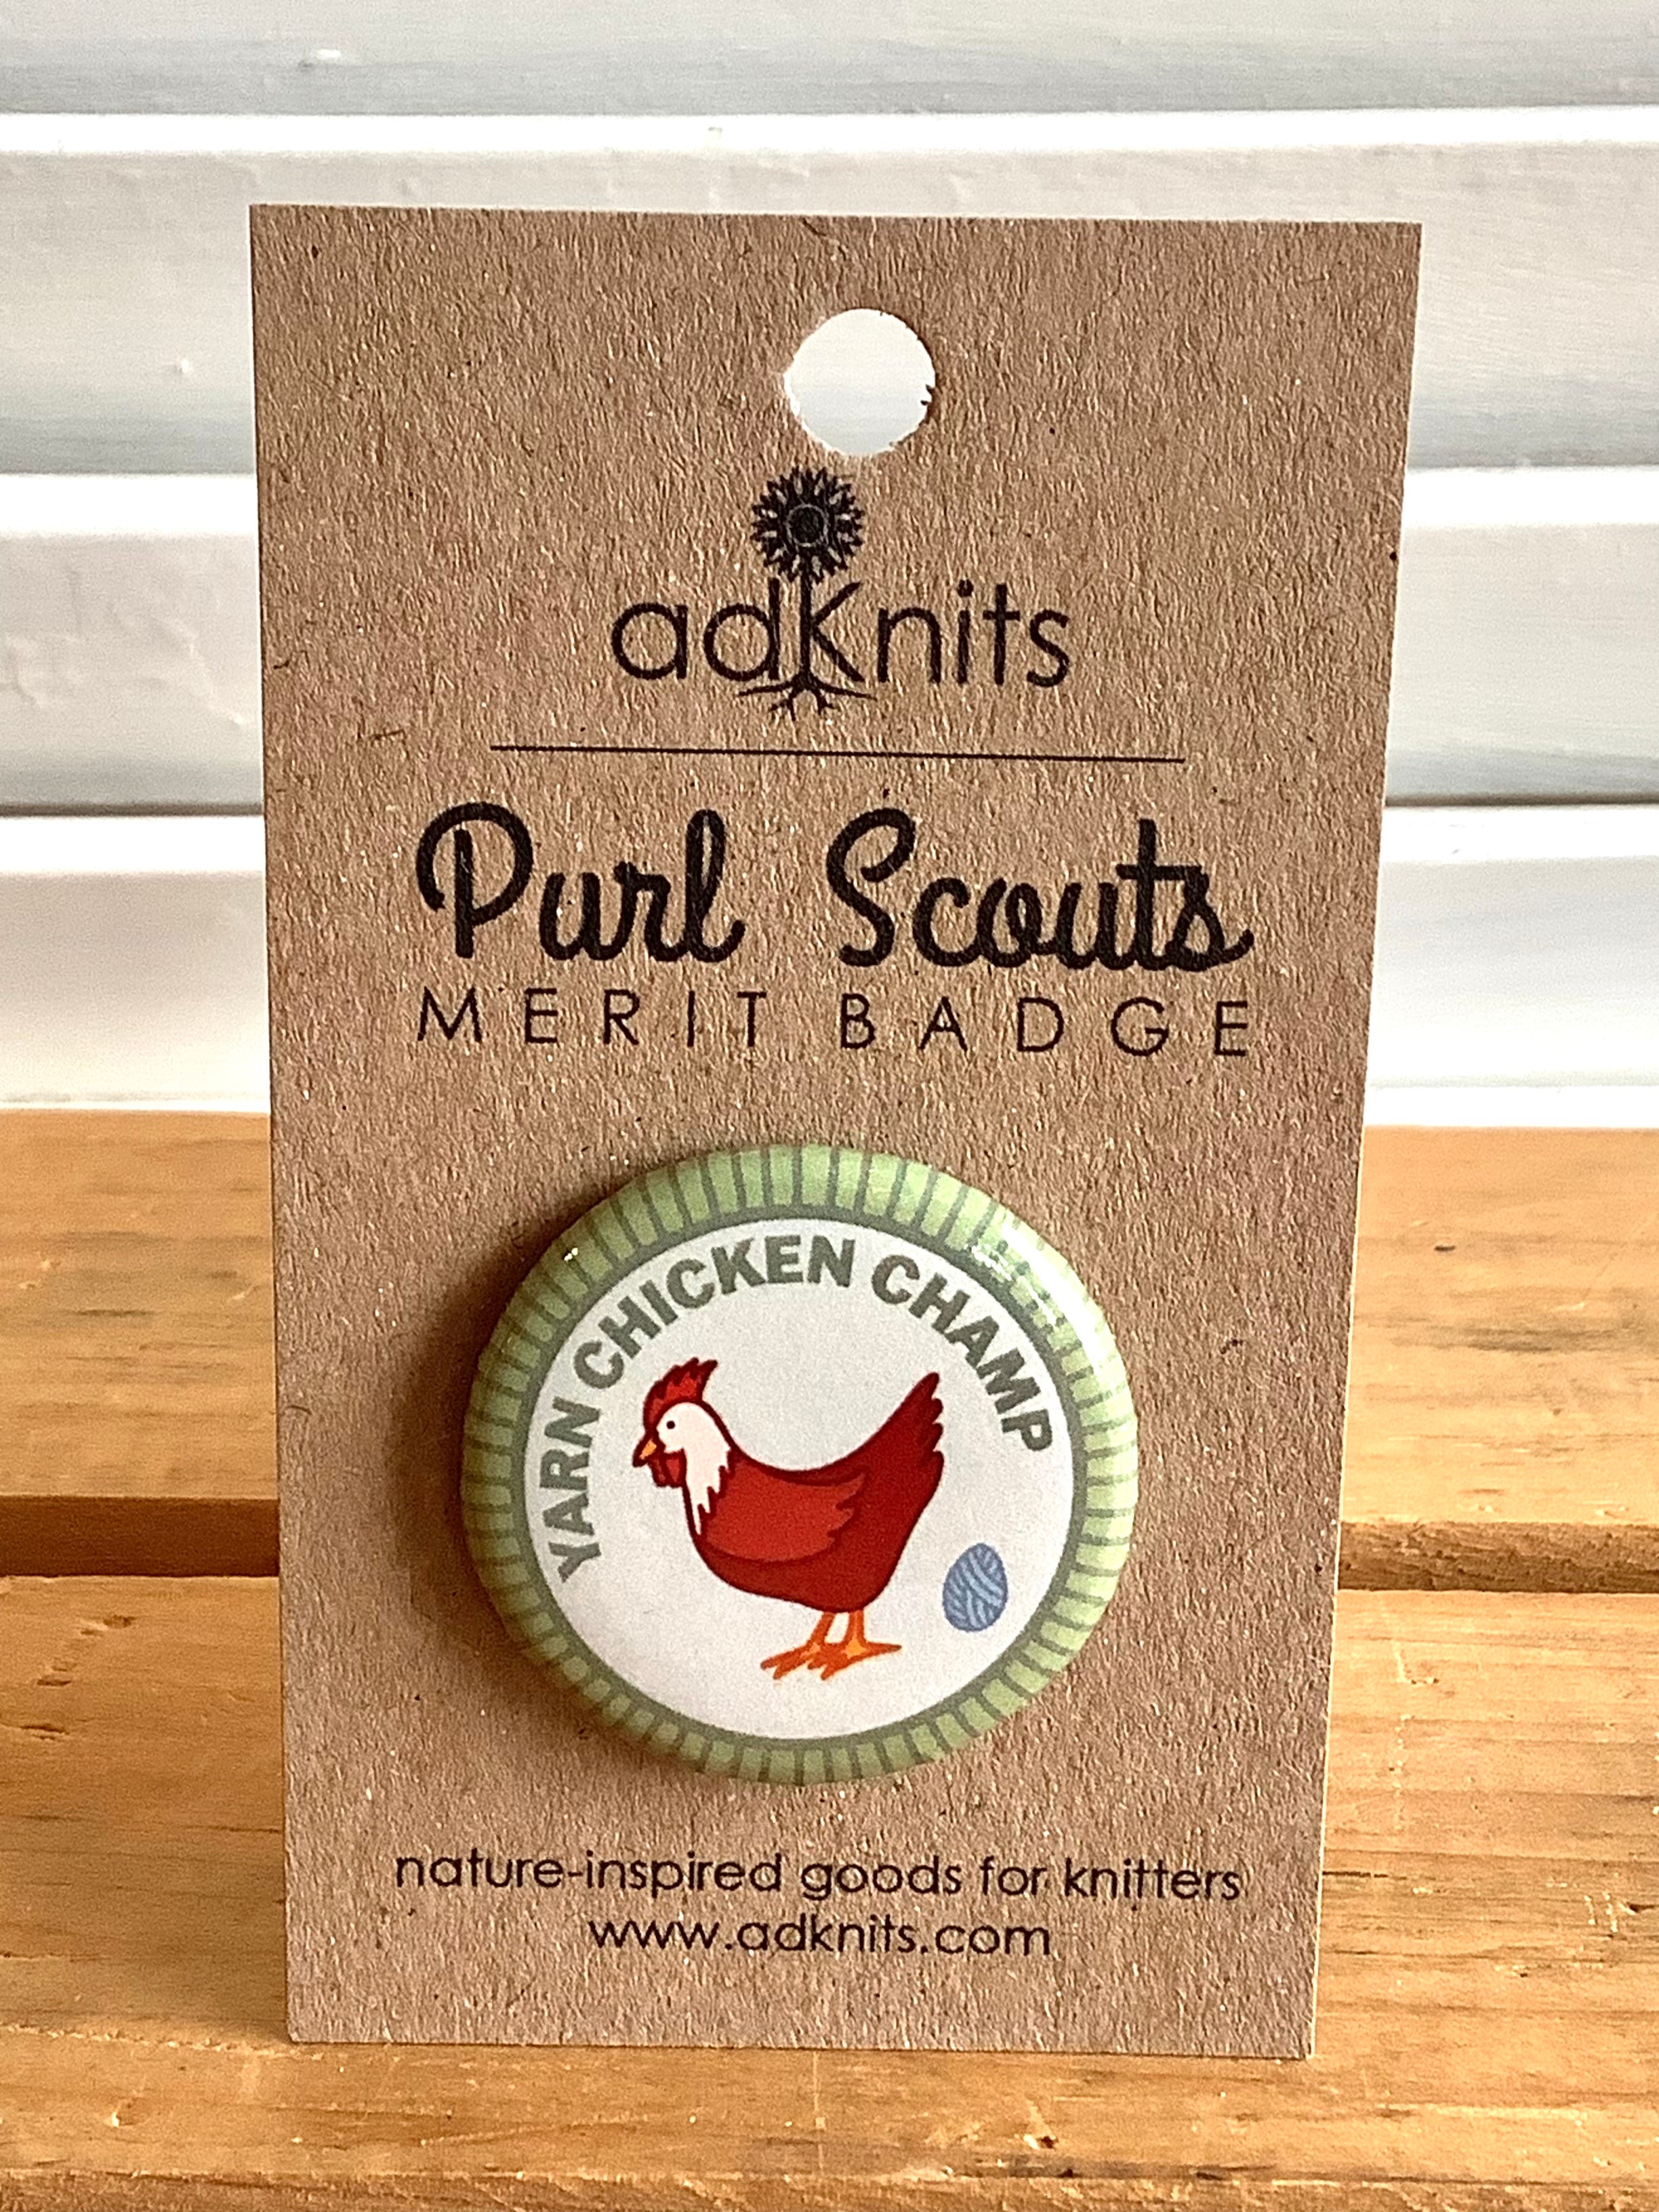 Yarn Chicken Champ - Purl Scouts Merit Badge